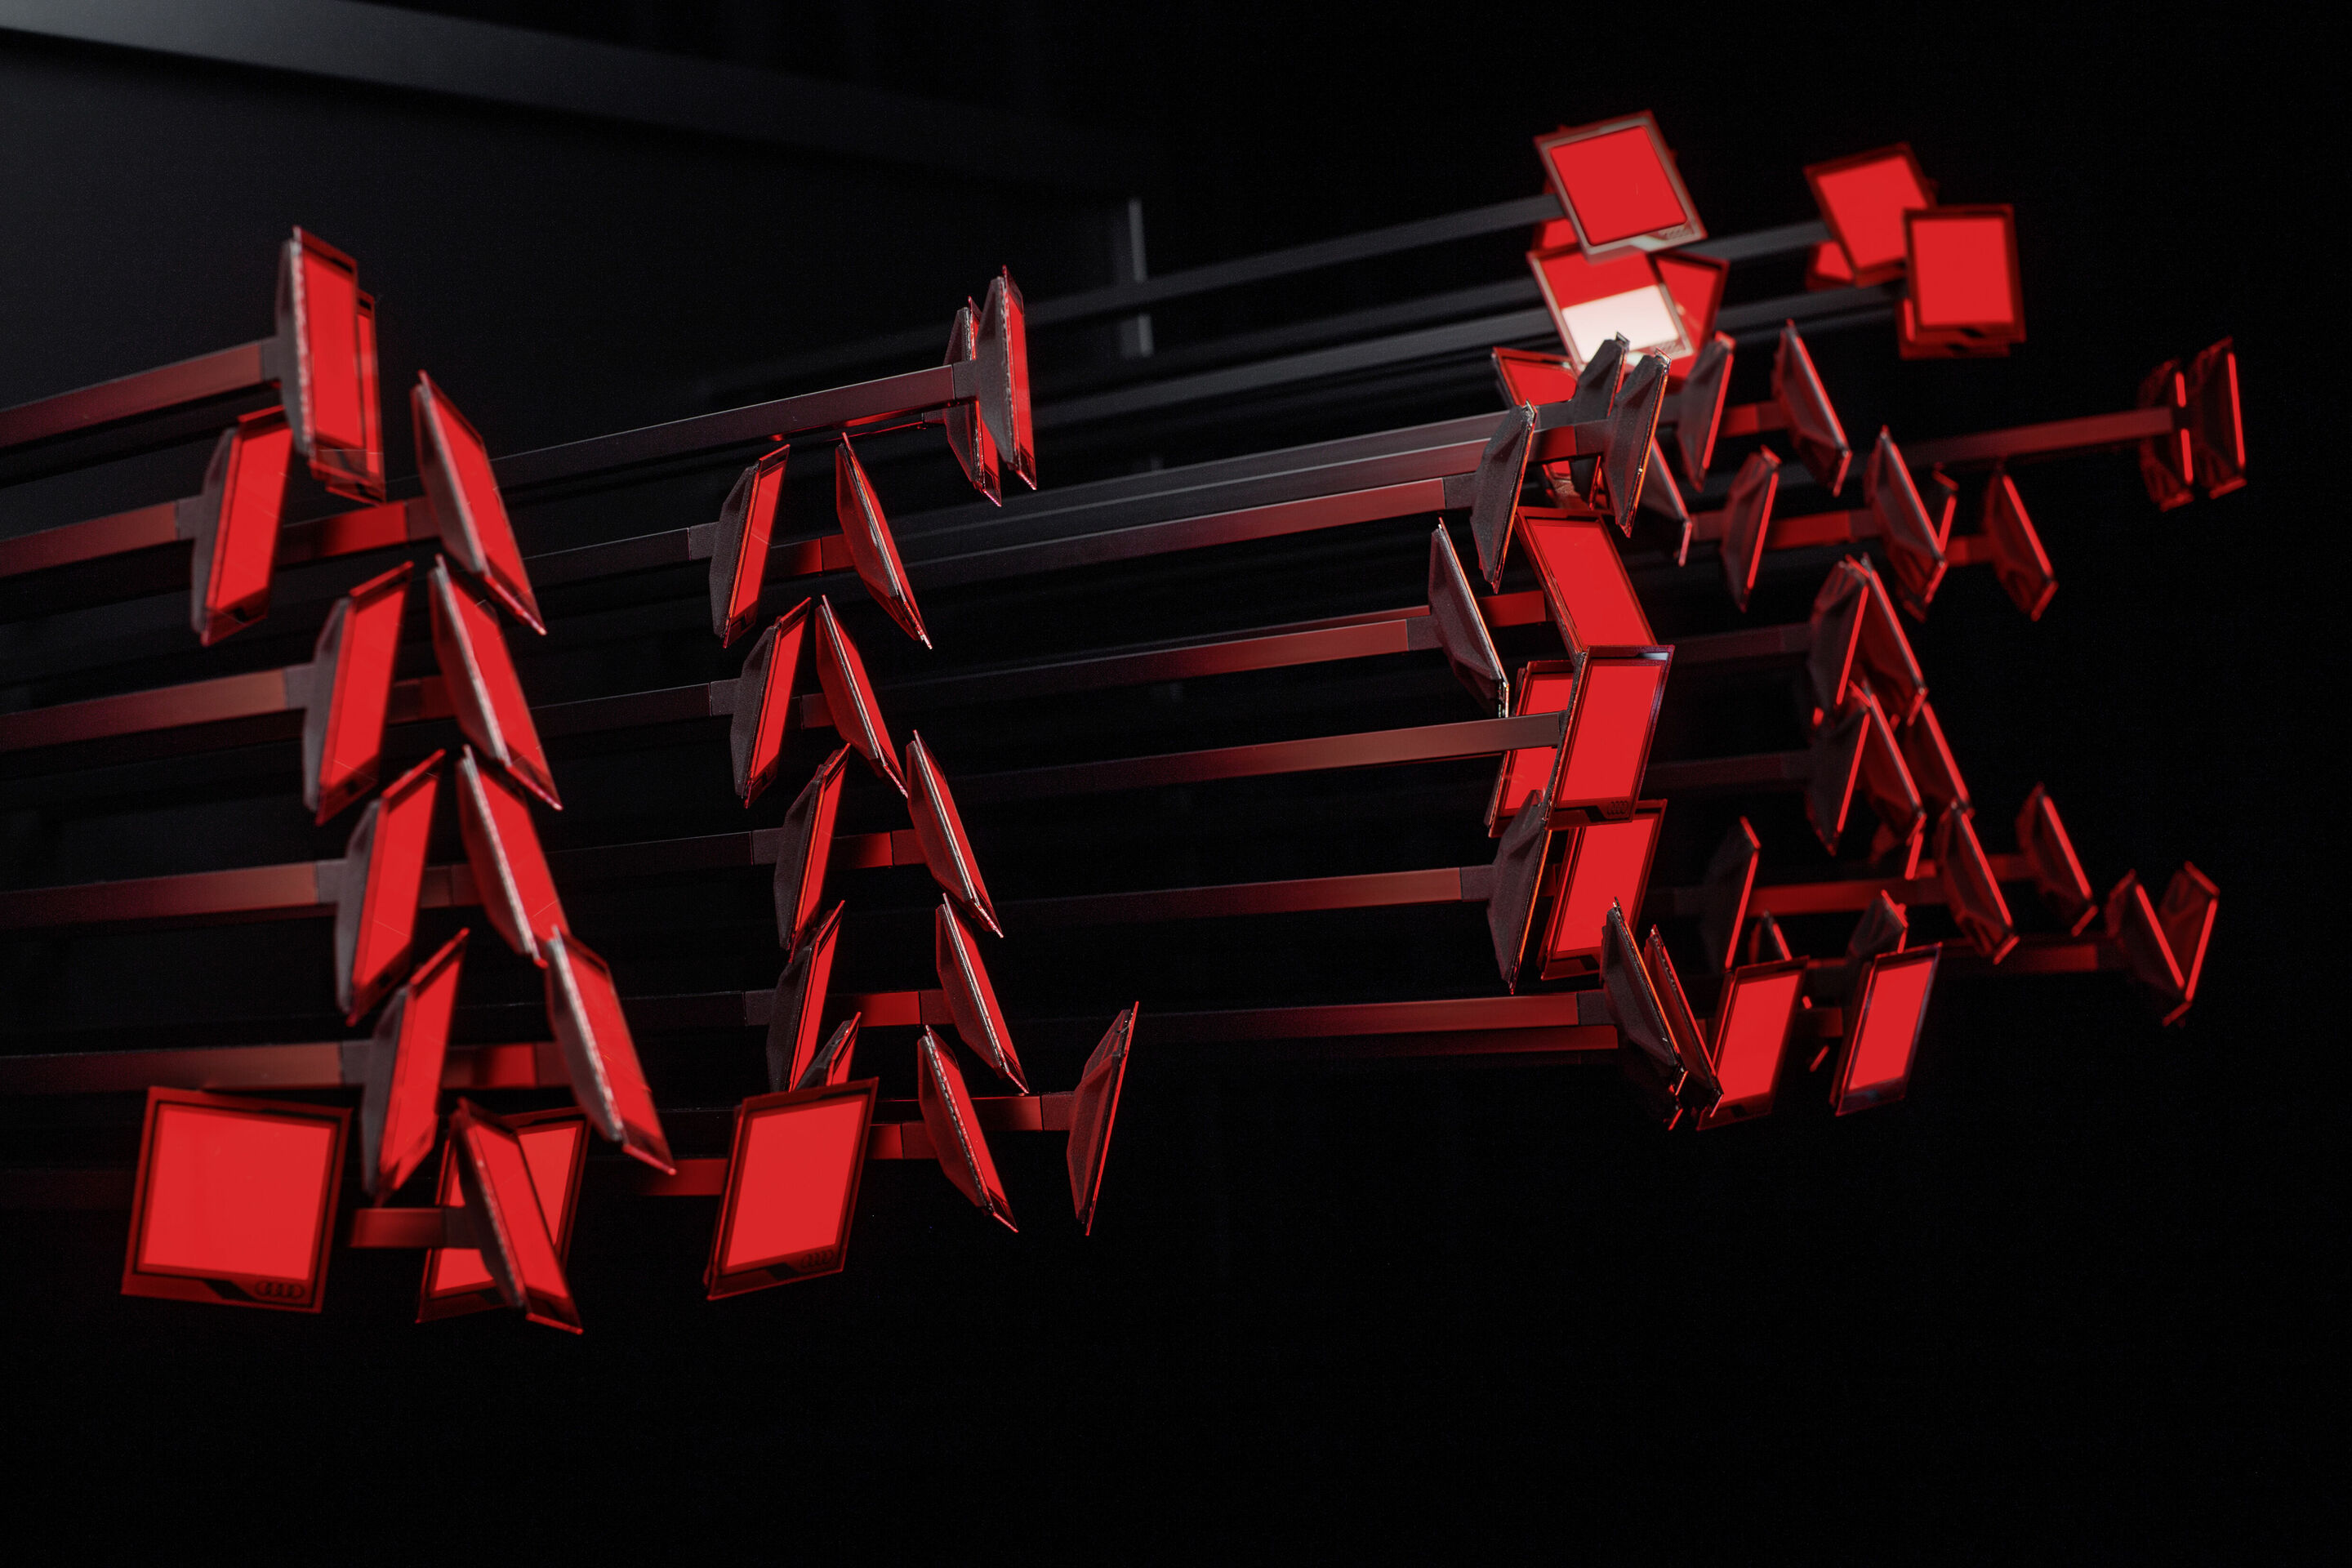 Aesthetics in motion –  Lighting design and lighting technologies at Audi